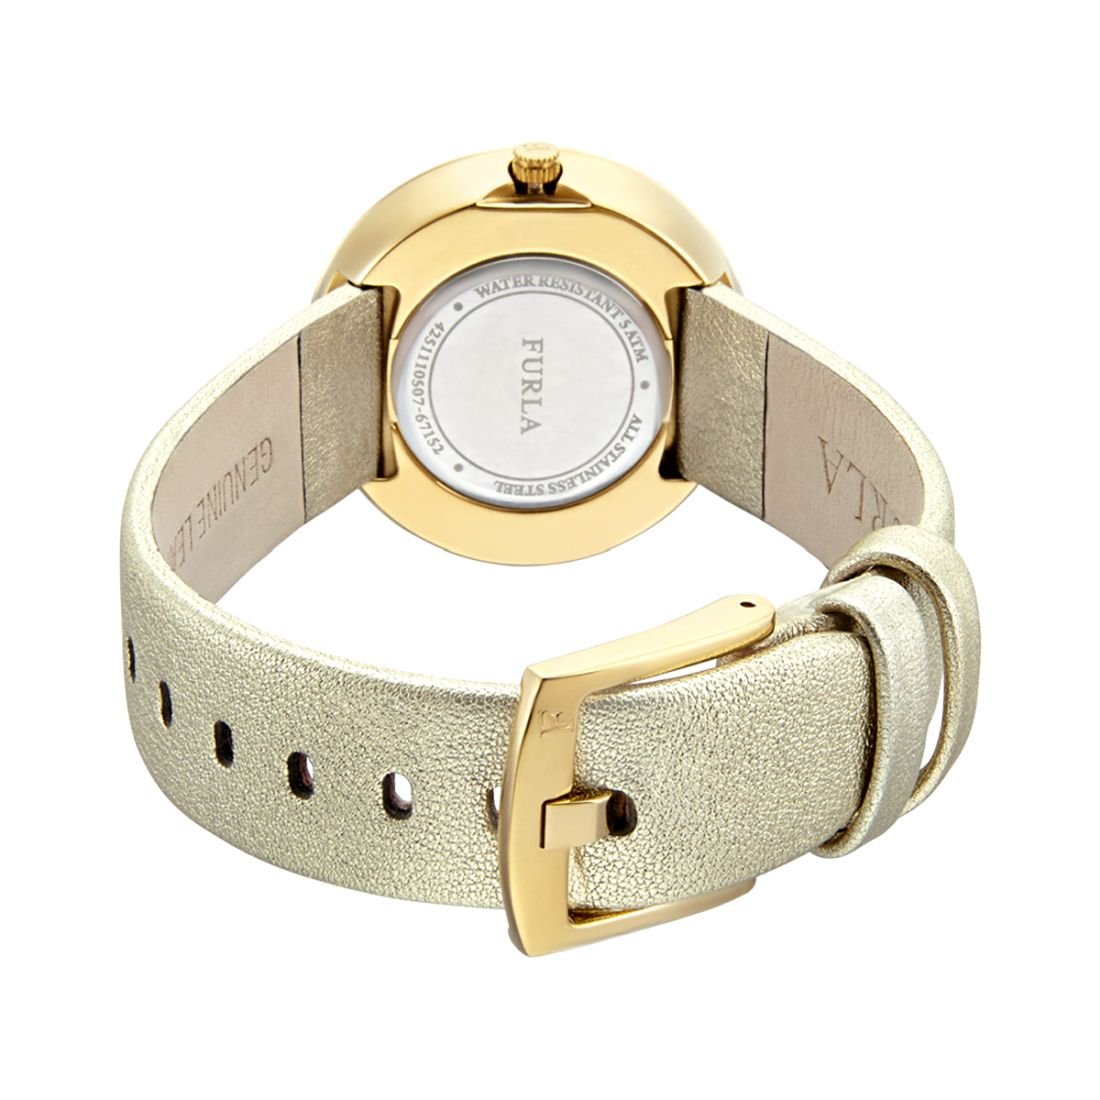 Furla R4251110507 womens quartz watch